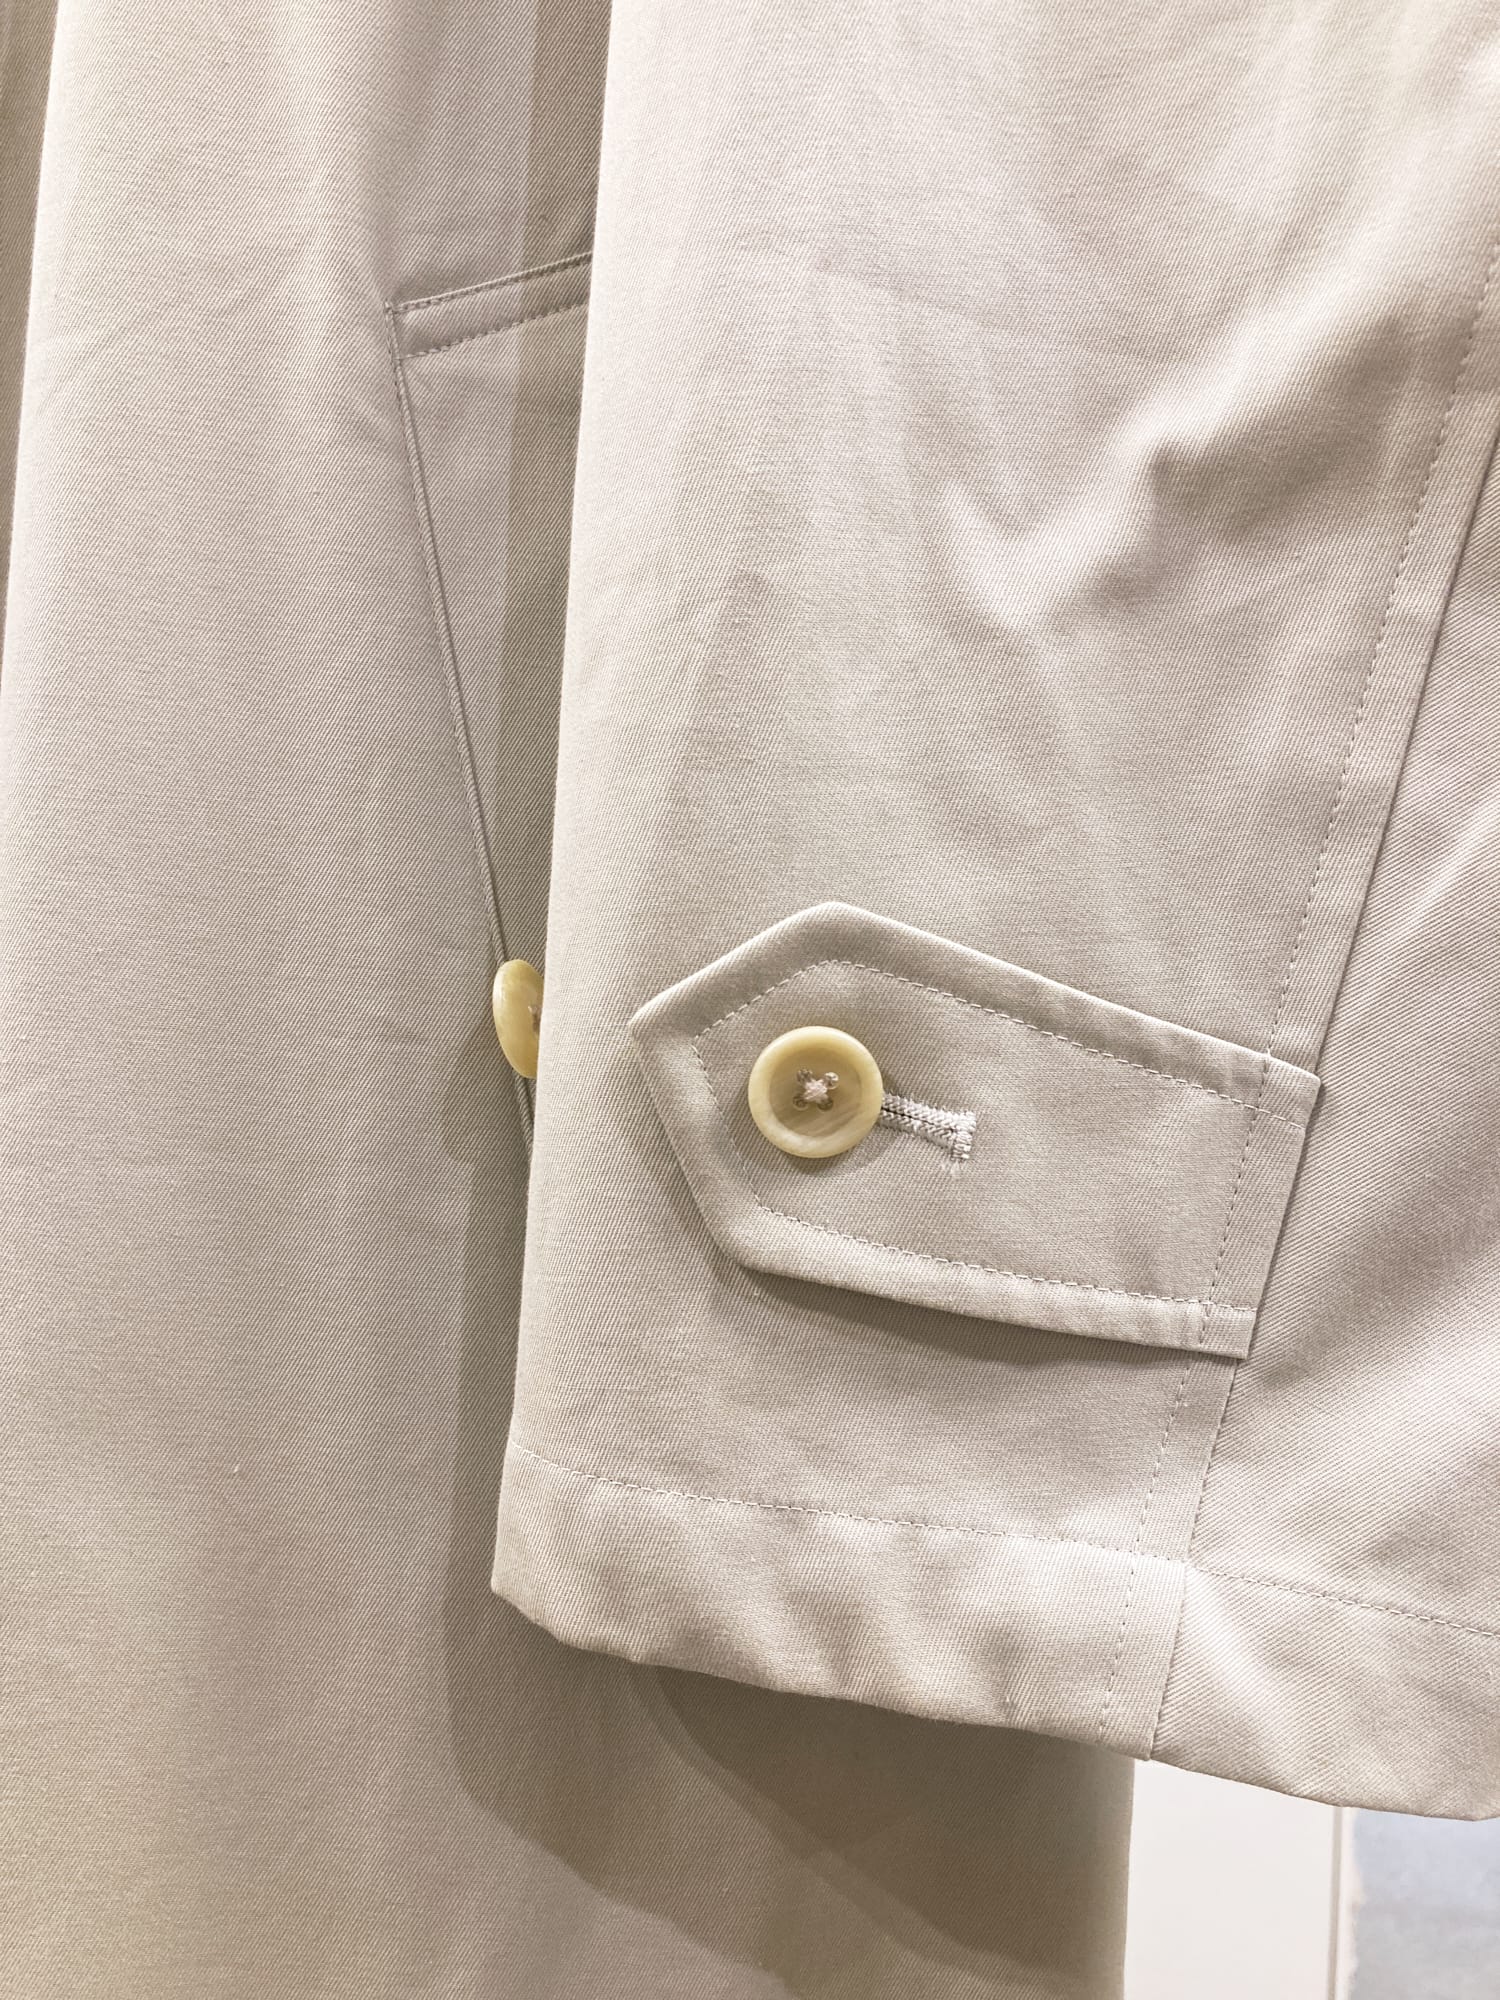 Yohji Yamamoto Impermeable Homme 1980s beige cotton raincoat with woolen liner